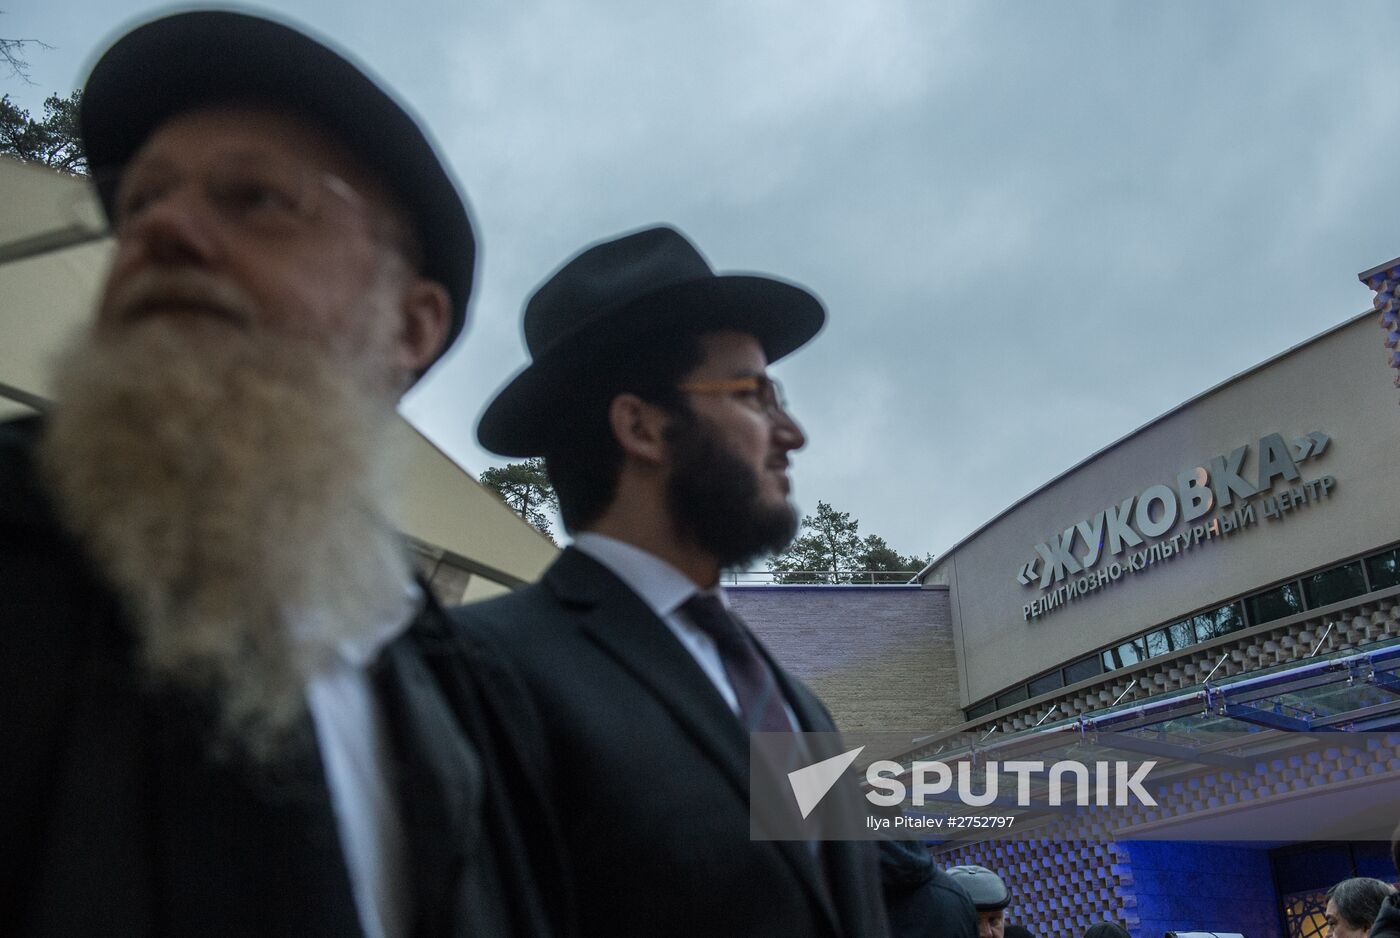 Jewish community center opens in Rublyovka